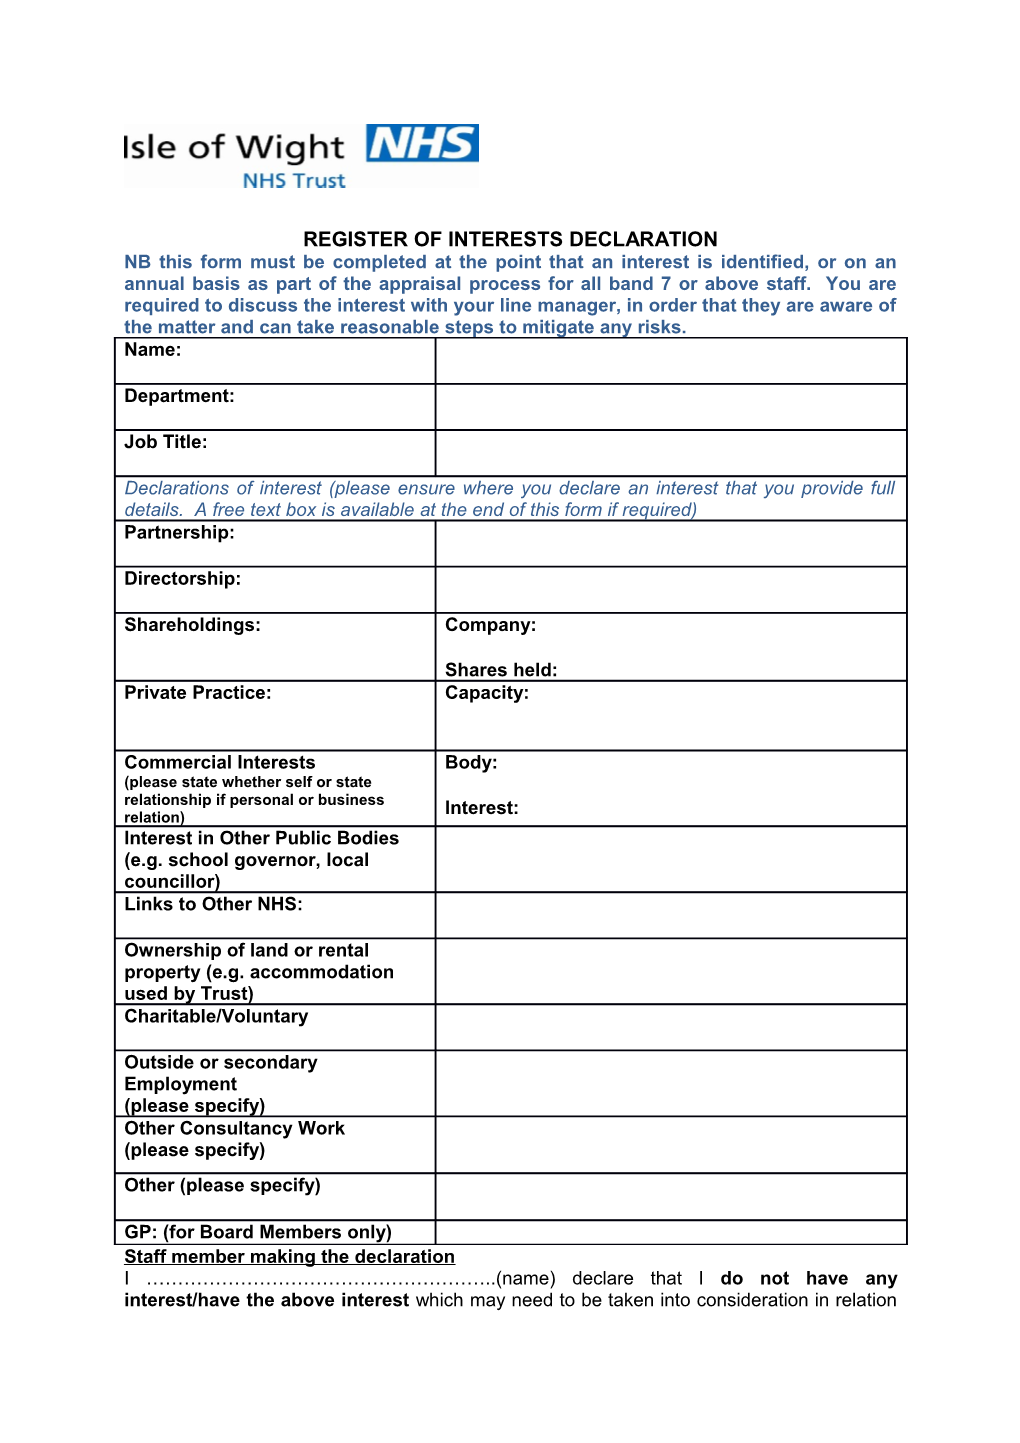 Register of Interests Declaration